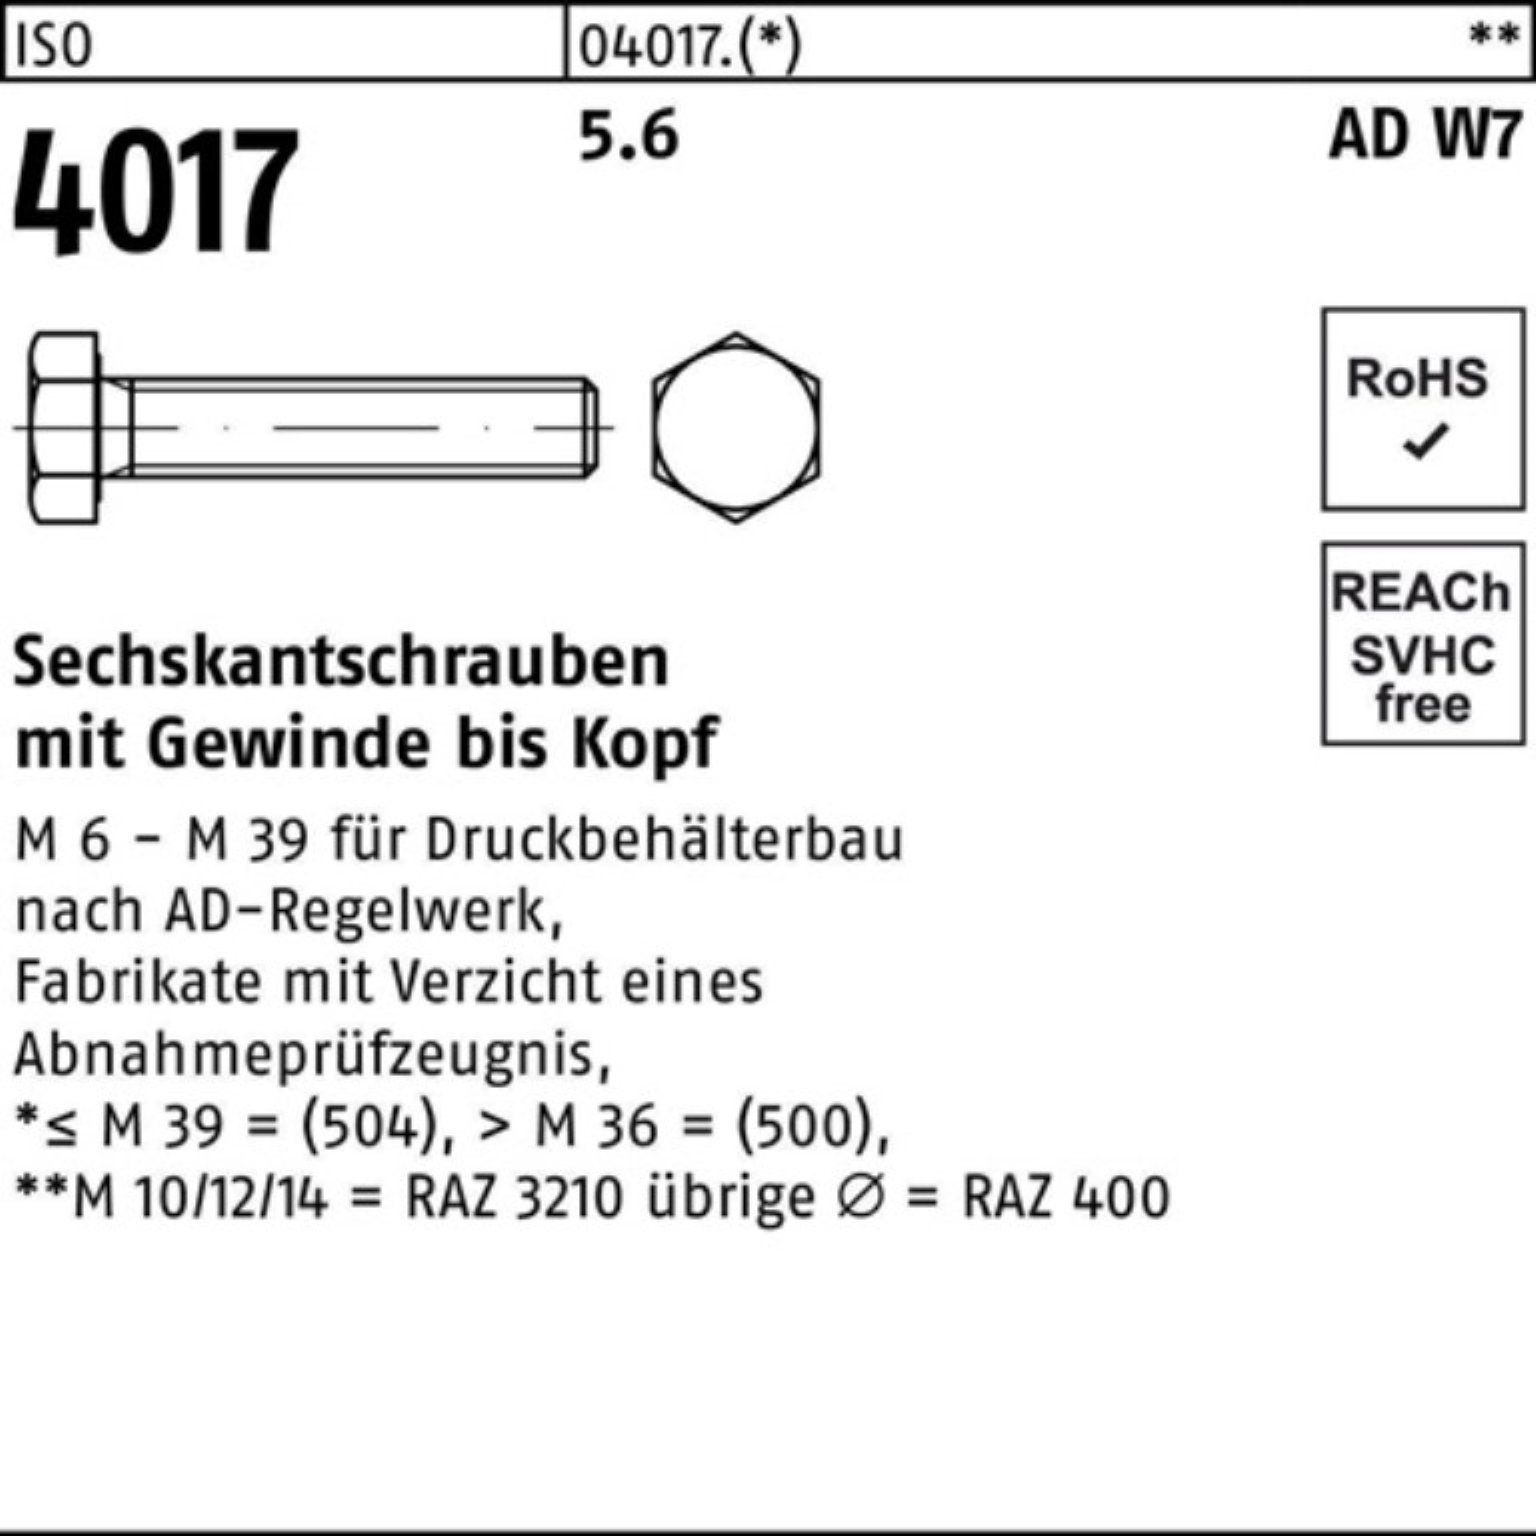 Bufab Sechskantschraube 100er 5.6 Stück VG 25 Pack 4017 AD W7 ISO I Sechskantschraube 70 M16x